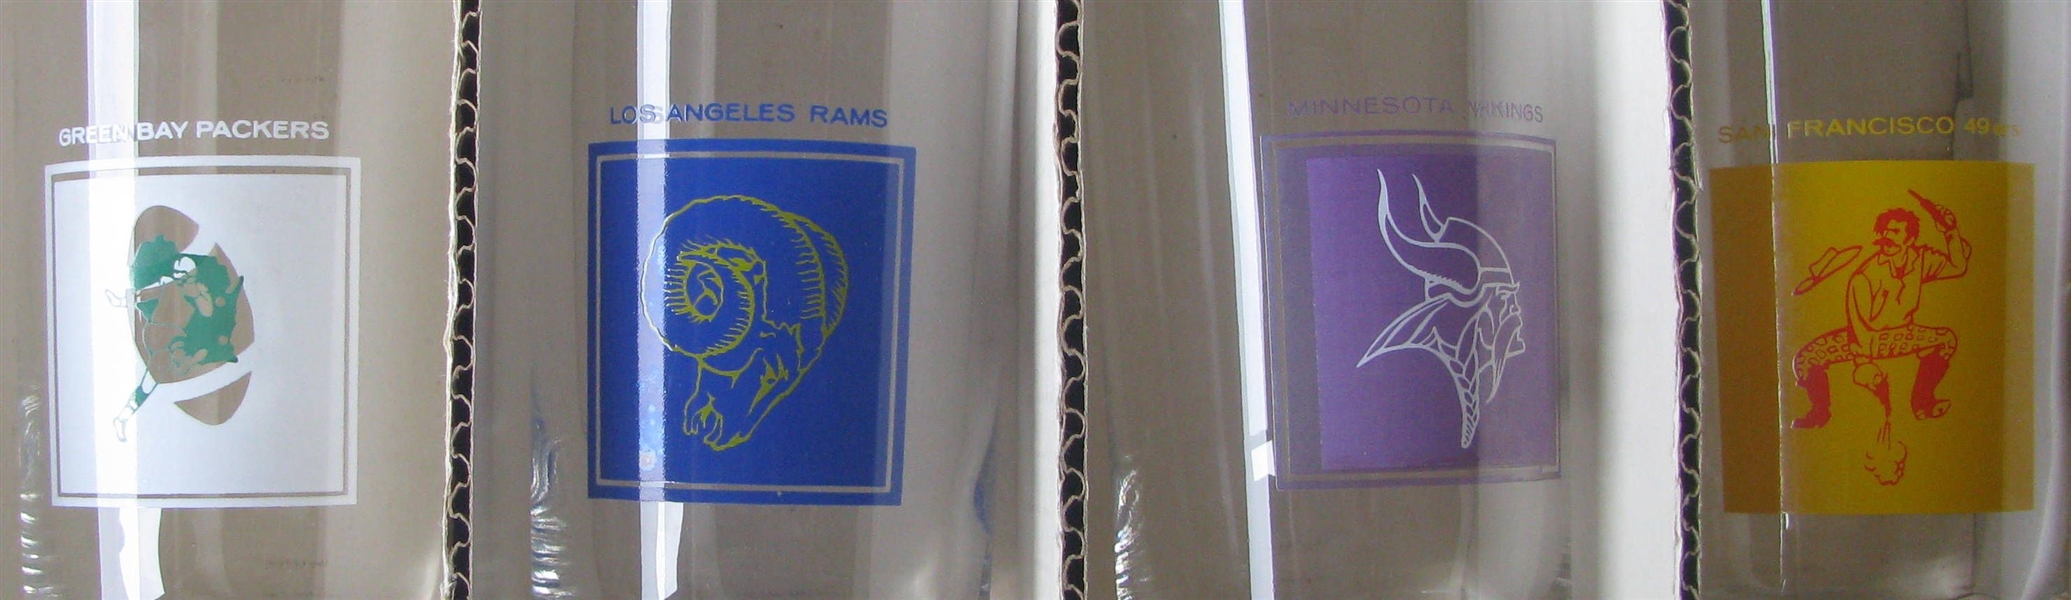 1963 NFL WESTERN DIVISION GLASS SET w/BOX